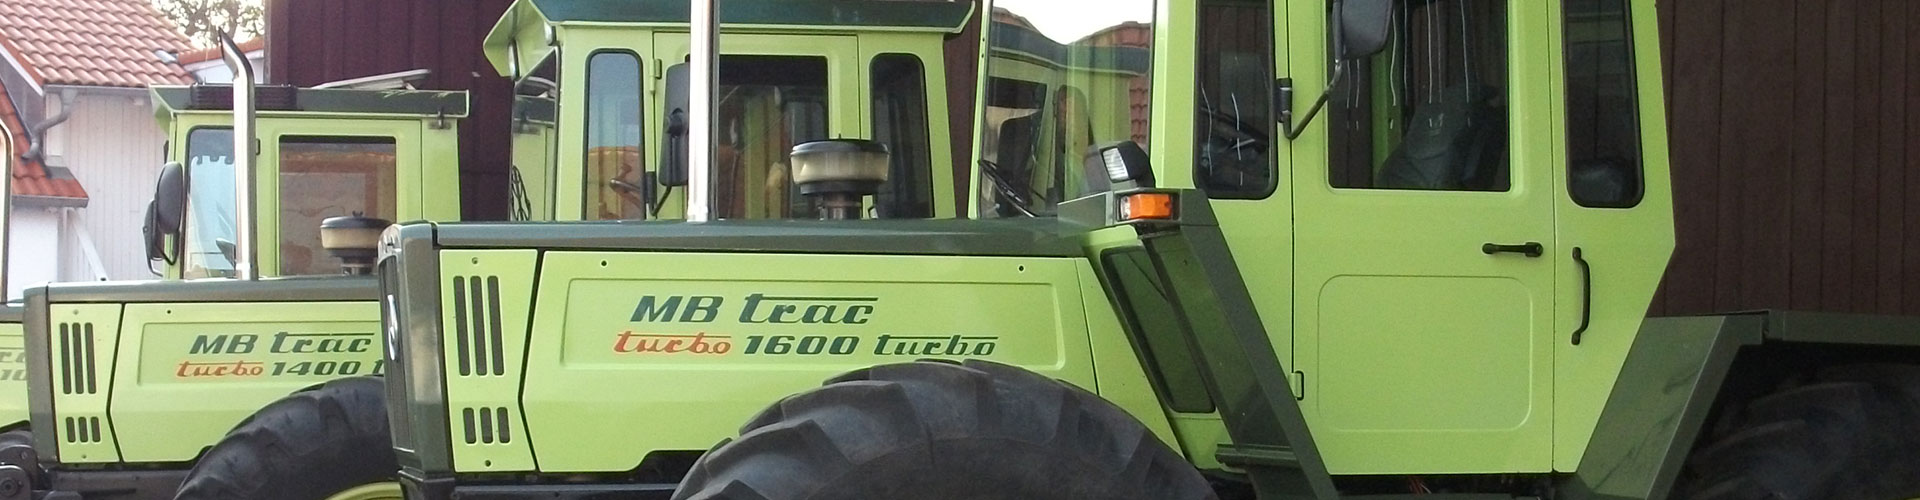 Fuchs Maschinenhandel Laaber Oberpfalz Traktoren Bagger Lader 